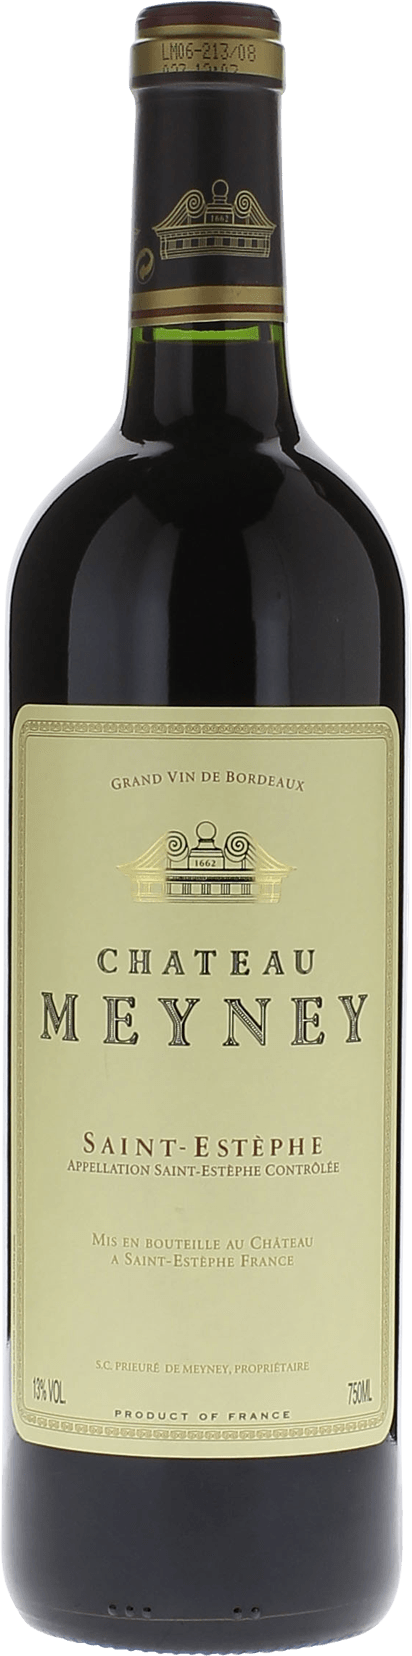 Meyney 2003  Saint-Estphe, Bordeaux rouge